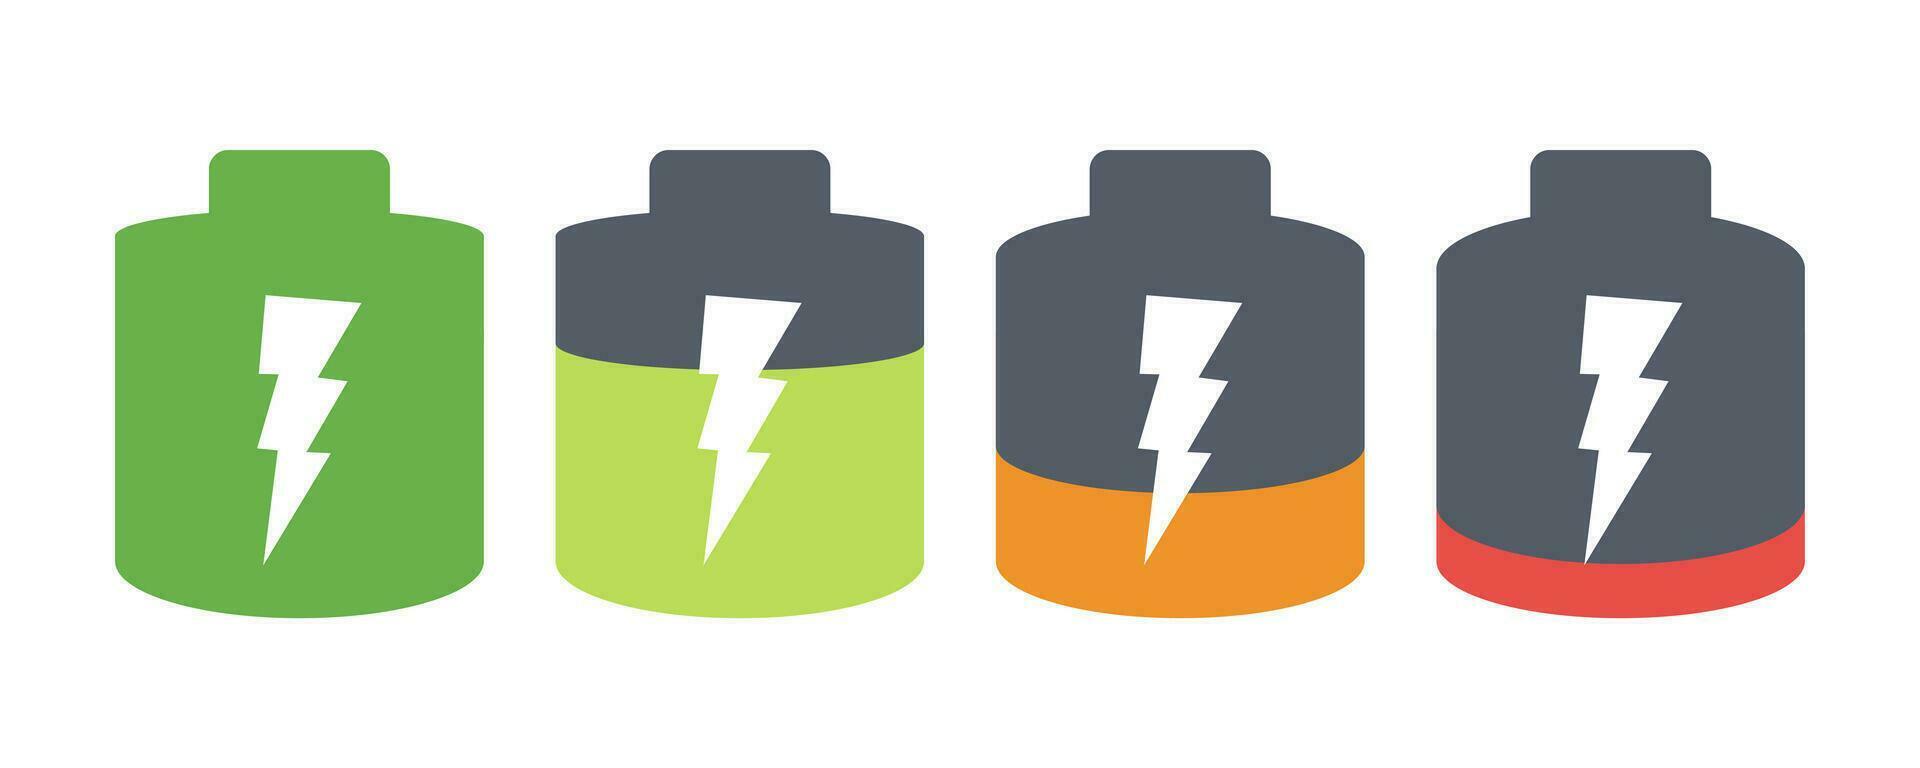 Battery power icons set on white background. Flat style vector illustration